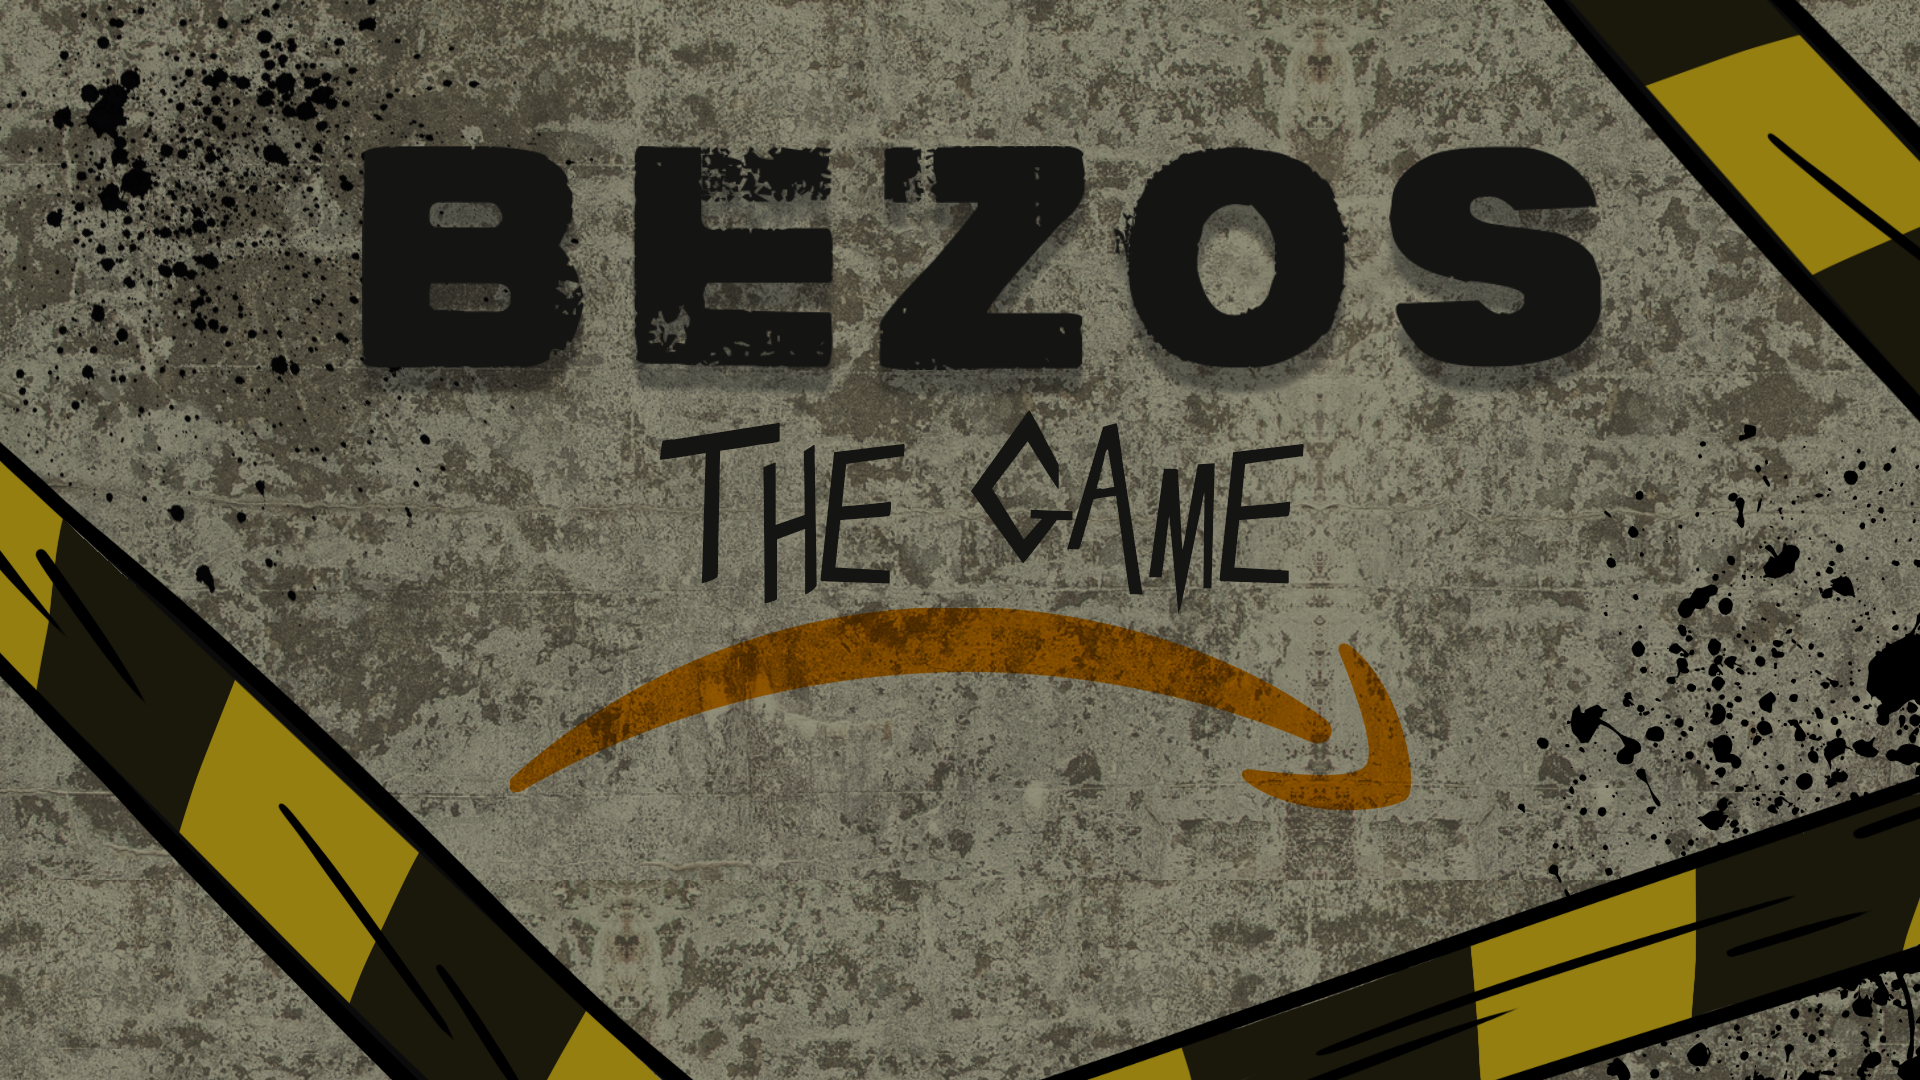 Bezos The Game